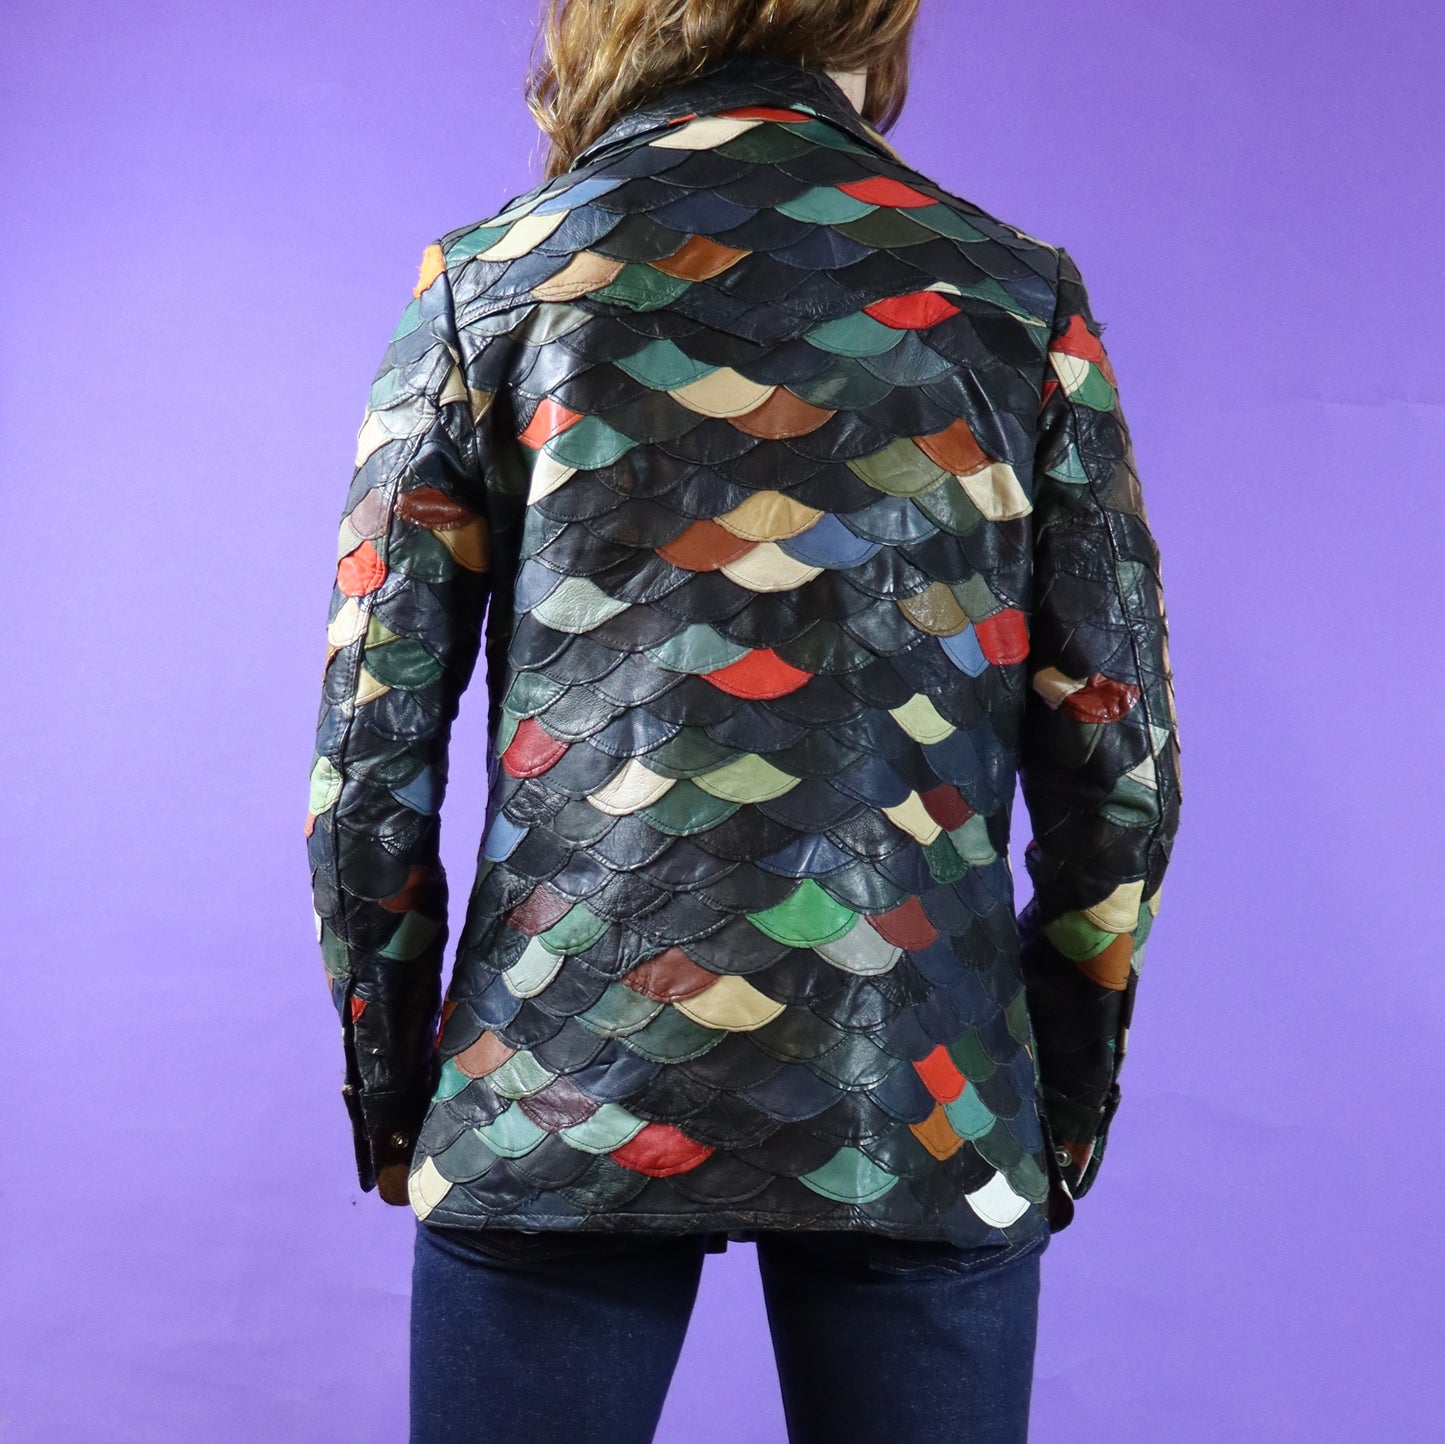 Vintage 1970s Fishscale patchwork rainbow leather jacket